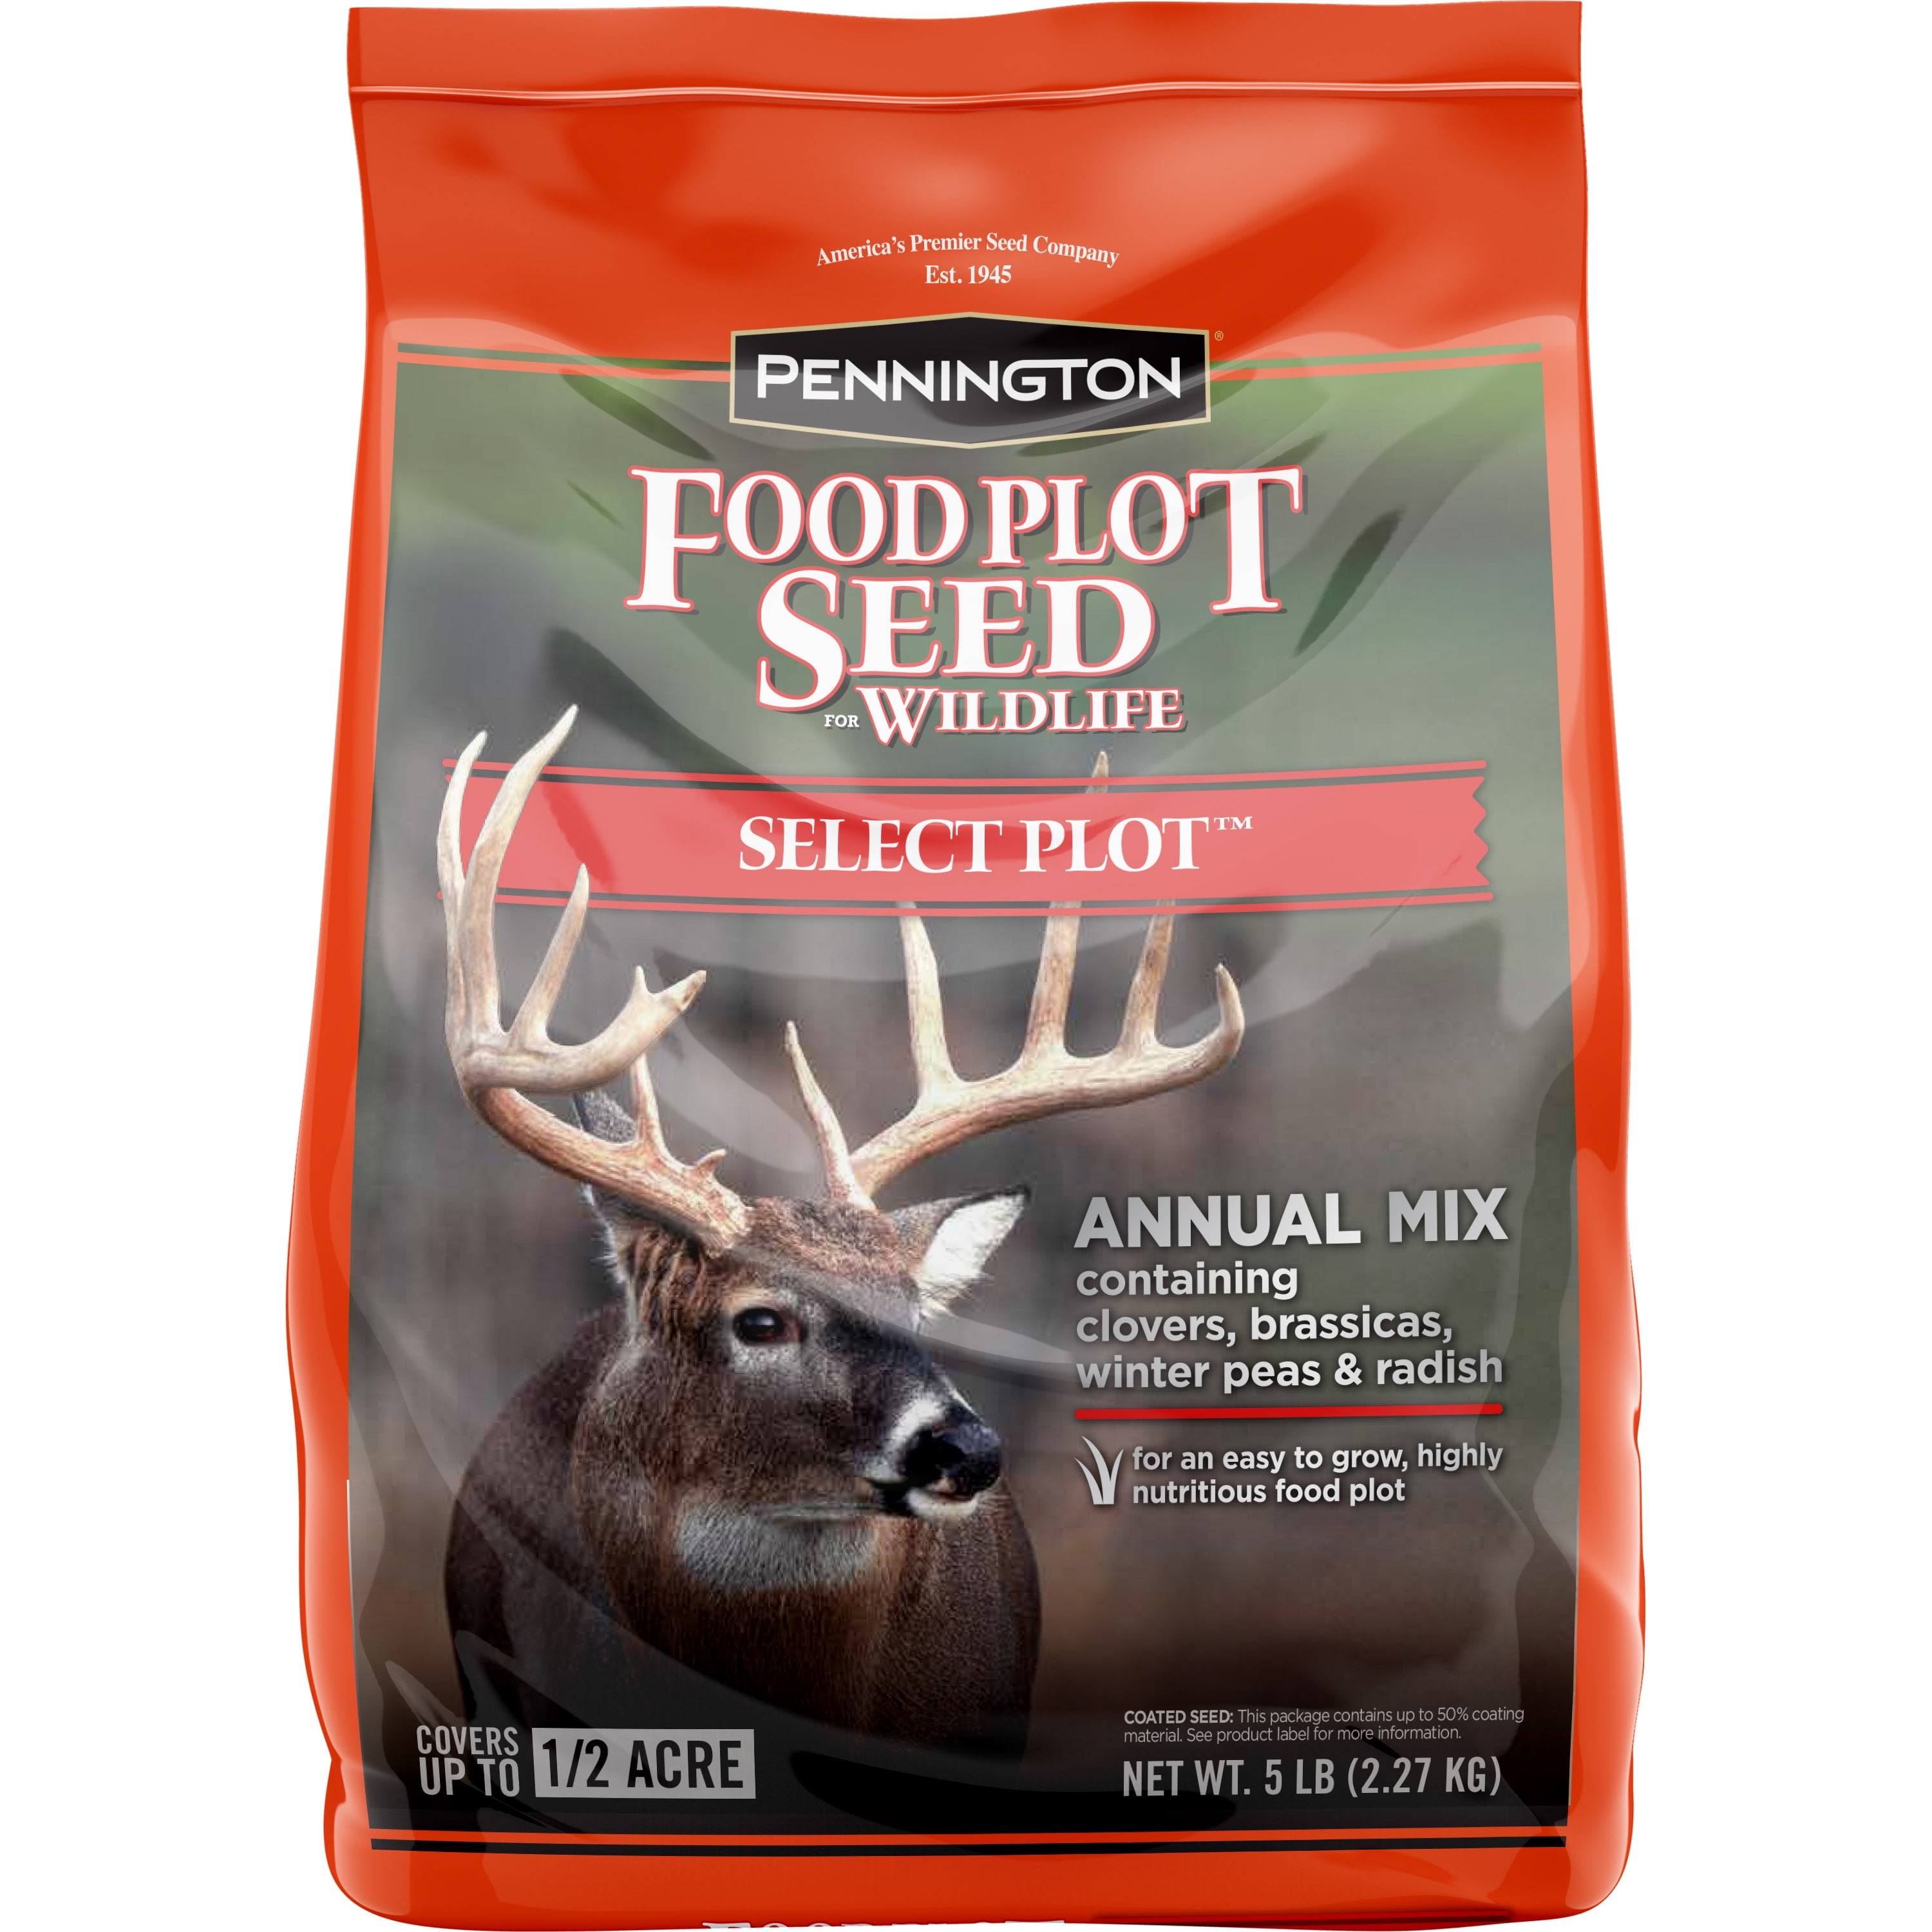 2 lbs Deer,Turkey and Wildlife Food Plot seed Mix Contains 10 Varieties of Seeds 